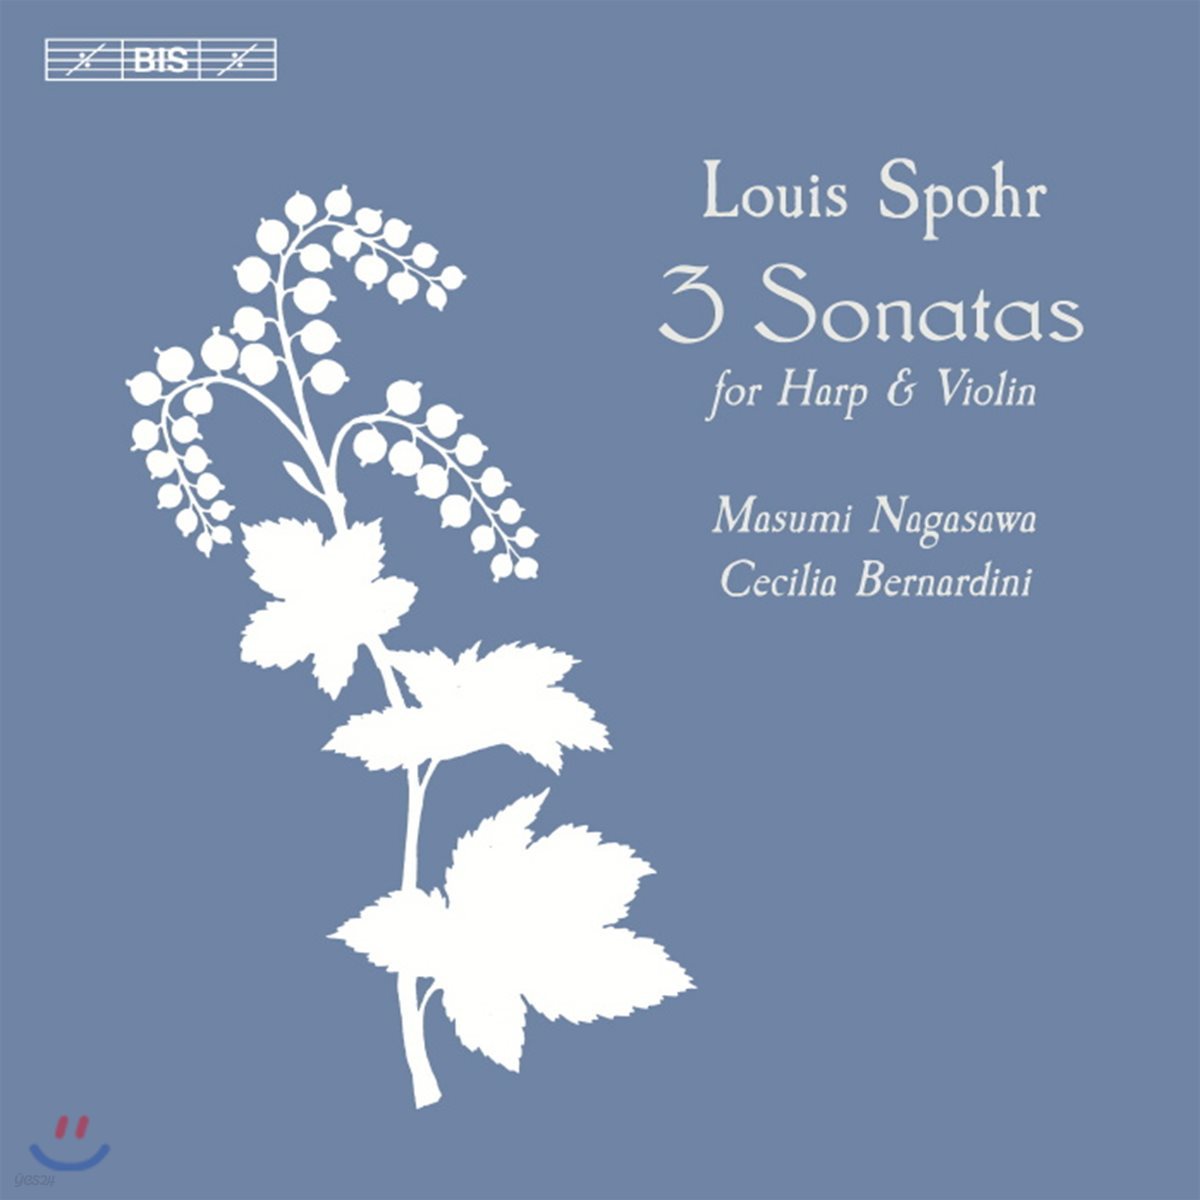 Cecilia Bernardini / Masumi Nagasawa 슈포어: 하프와 바이올린을 위한 소나타 Op. 113 - 115 (Spohr: 3 Sonatas for Harp & Violin)